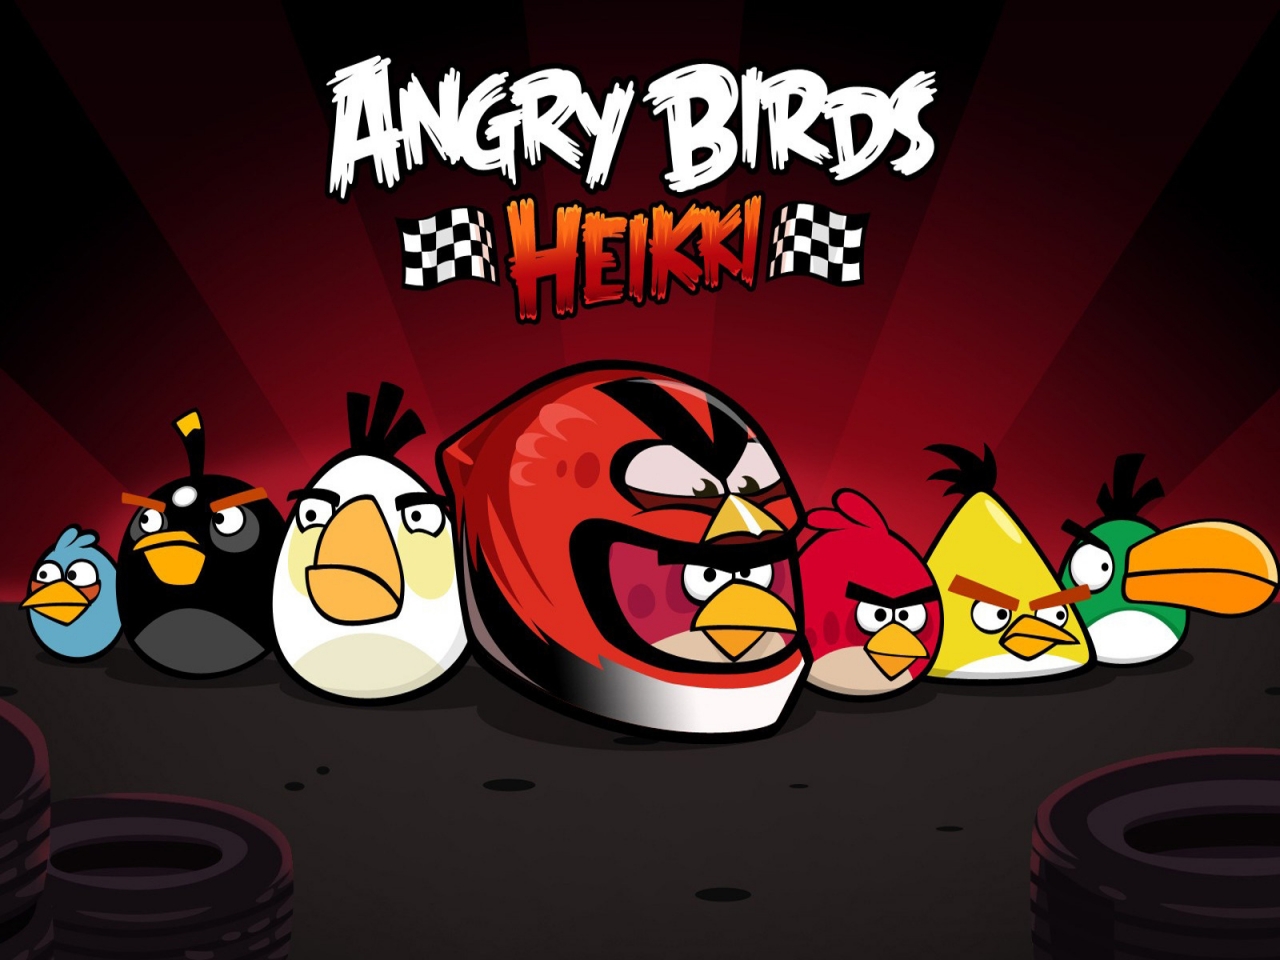 Angry Birds Heikki for 1280 x 960 resolution